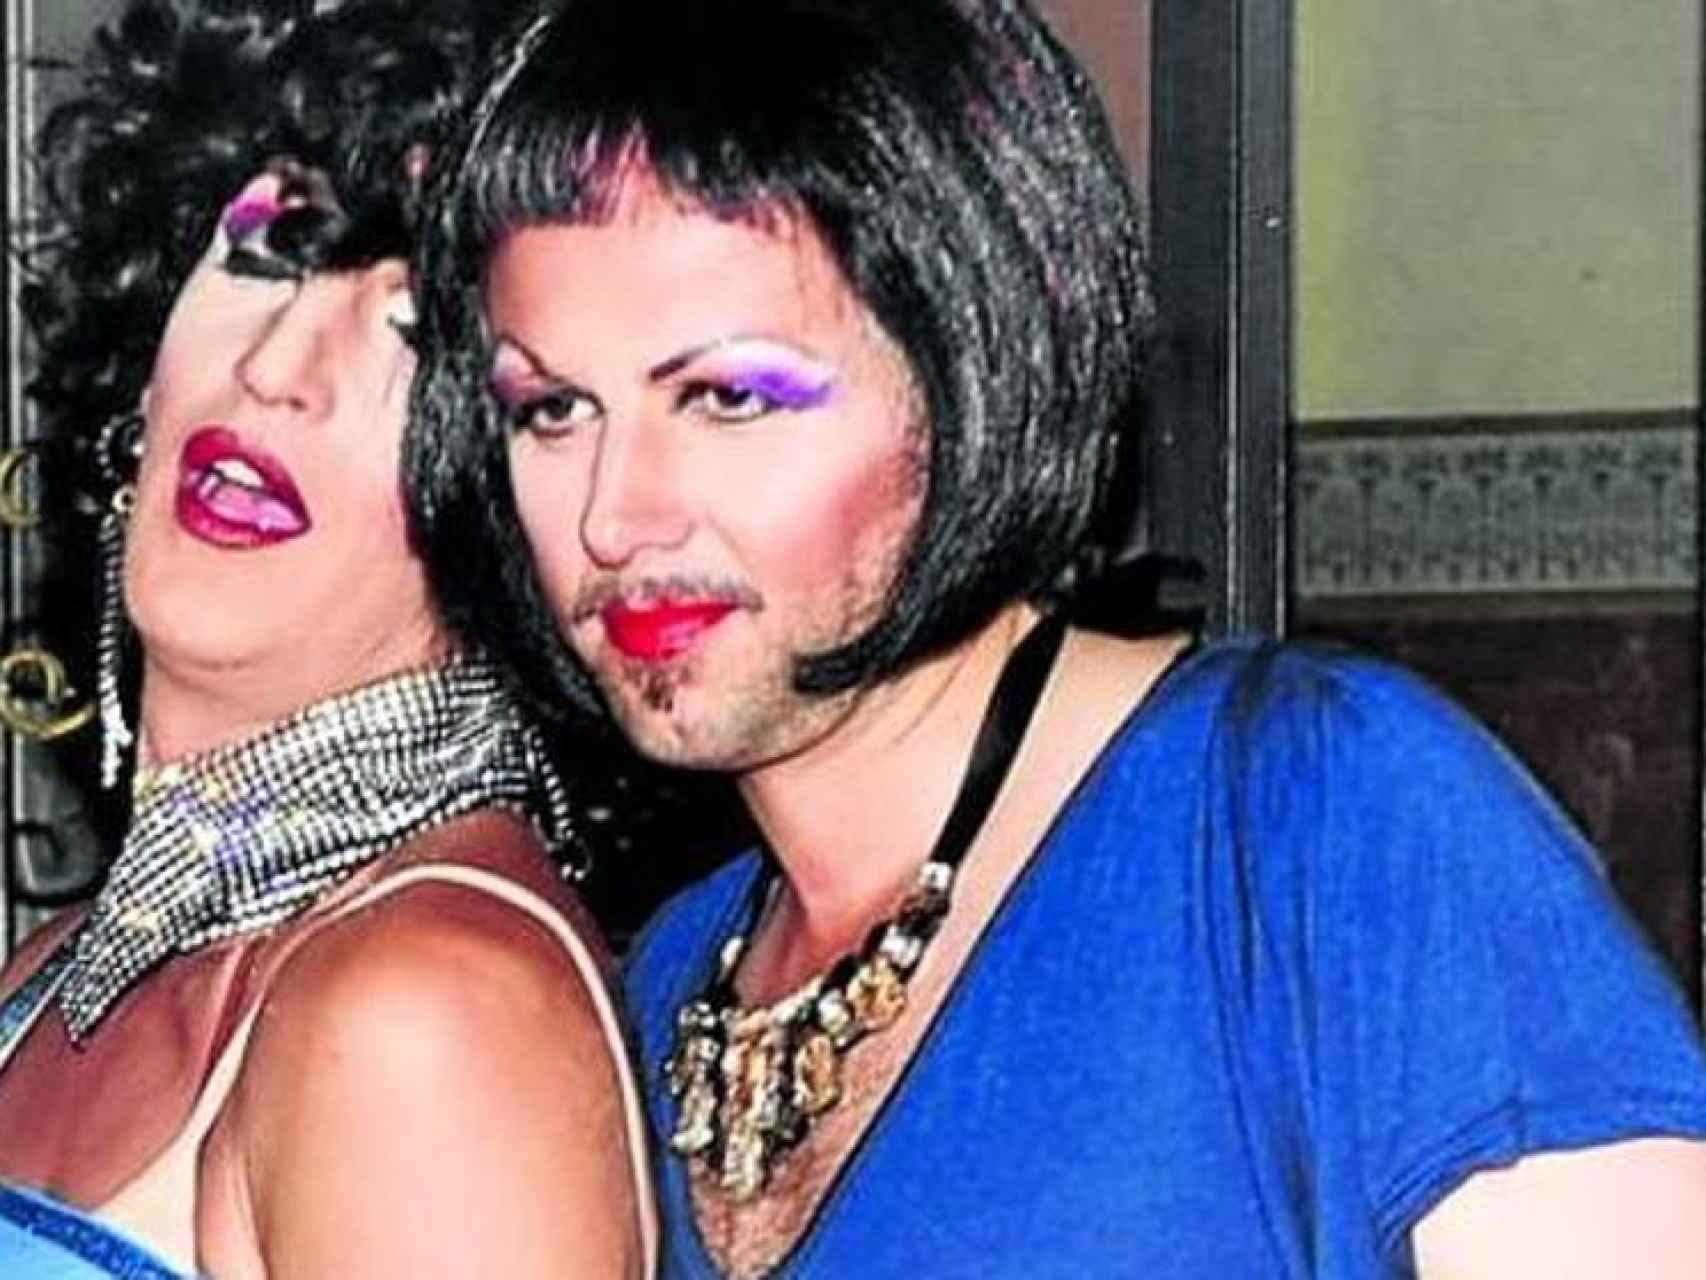 Ari Behn, disfrazado de drag queen